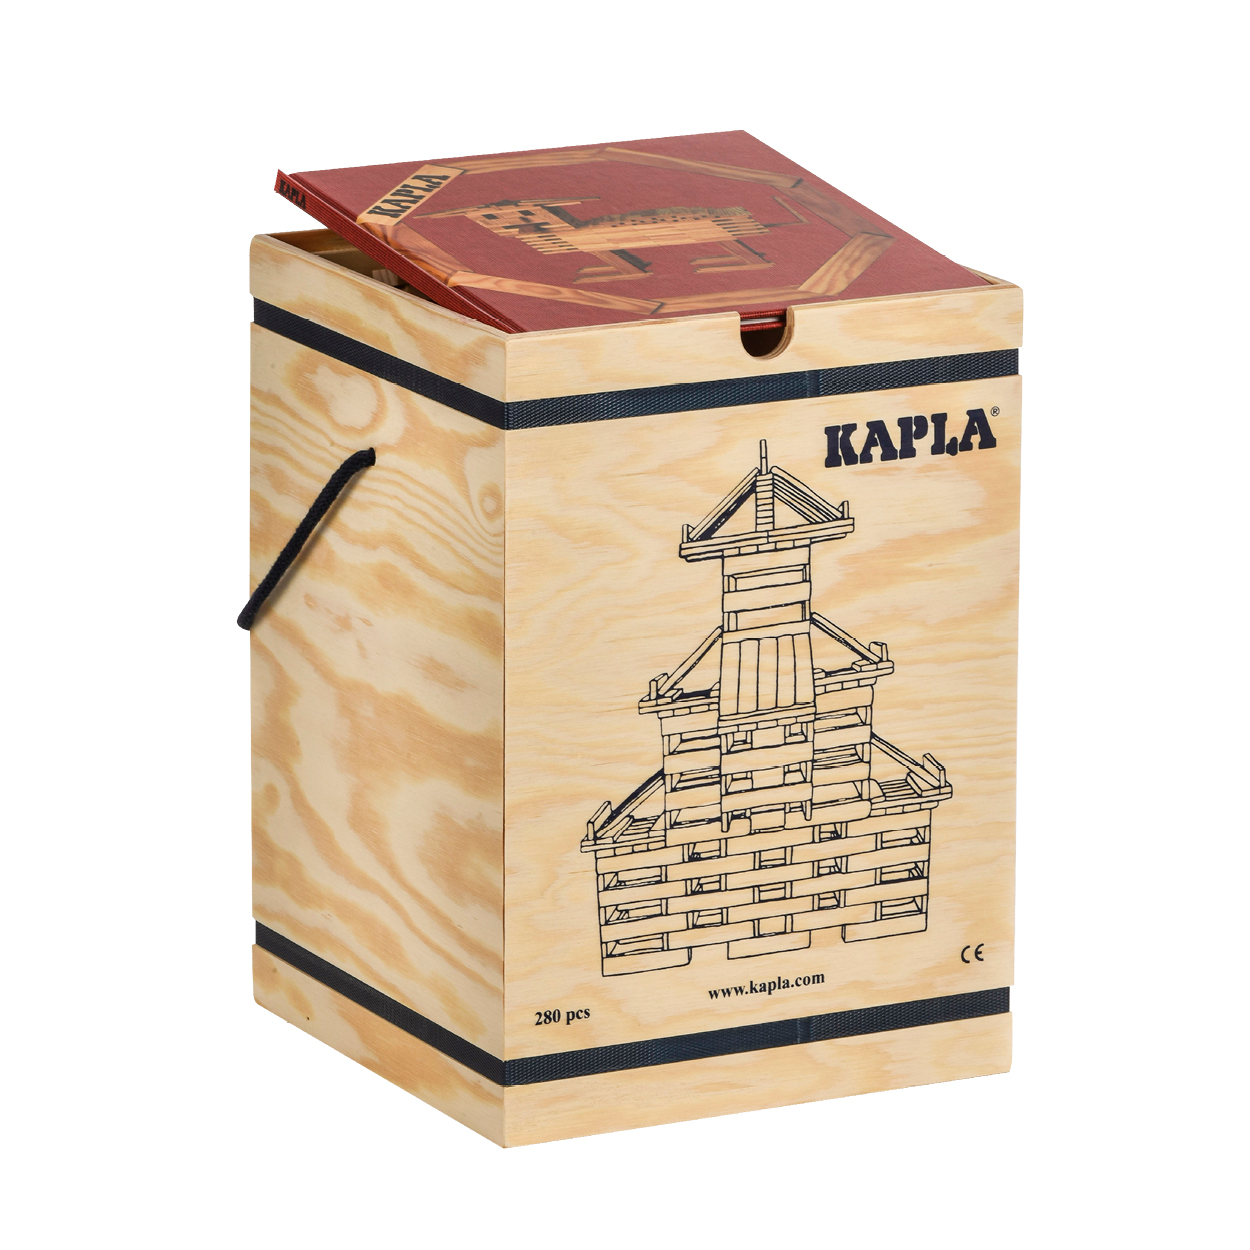 FAP-K-280-R - KAPLA280 積木盒-#1 紅 (280PCS)